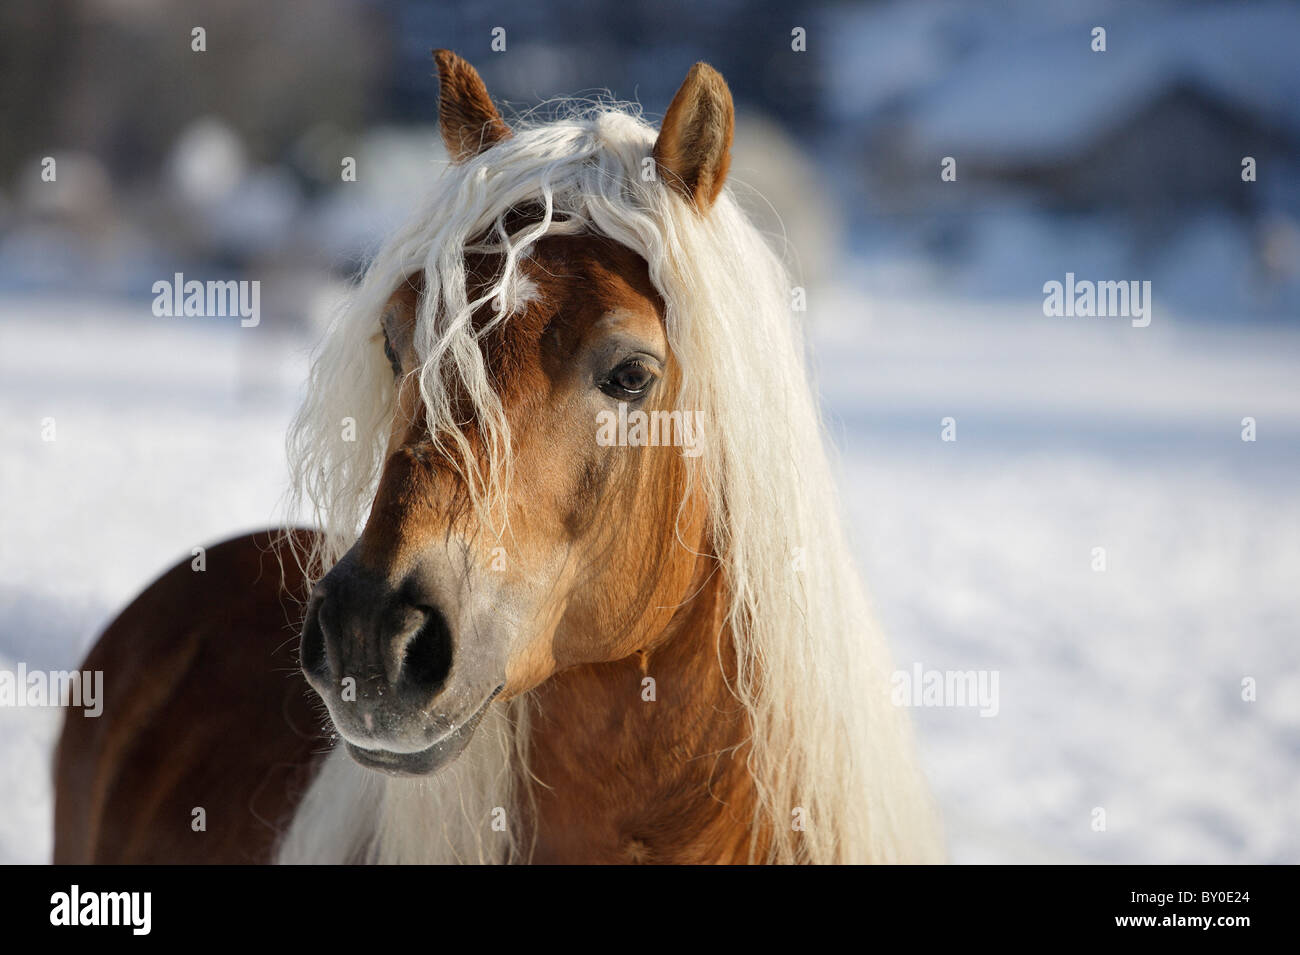 Avelignese horse - portrait Stock Photo